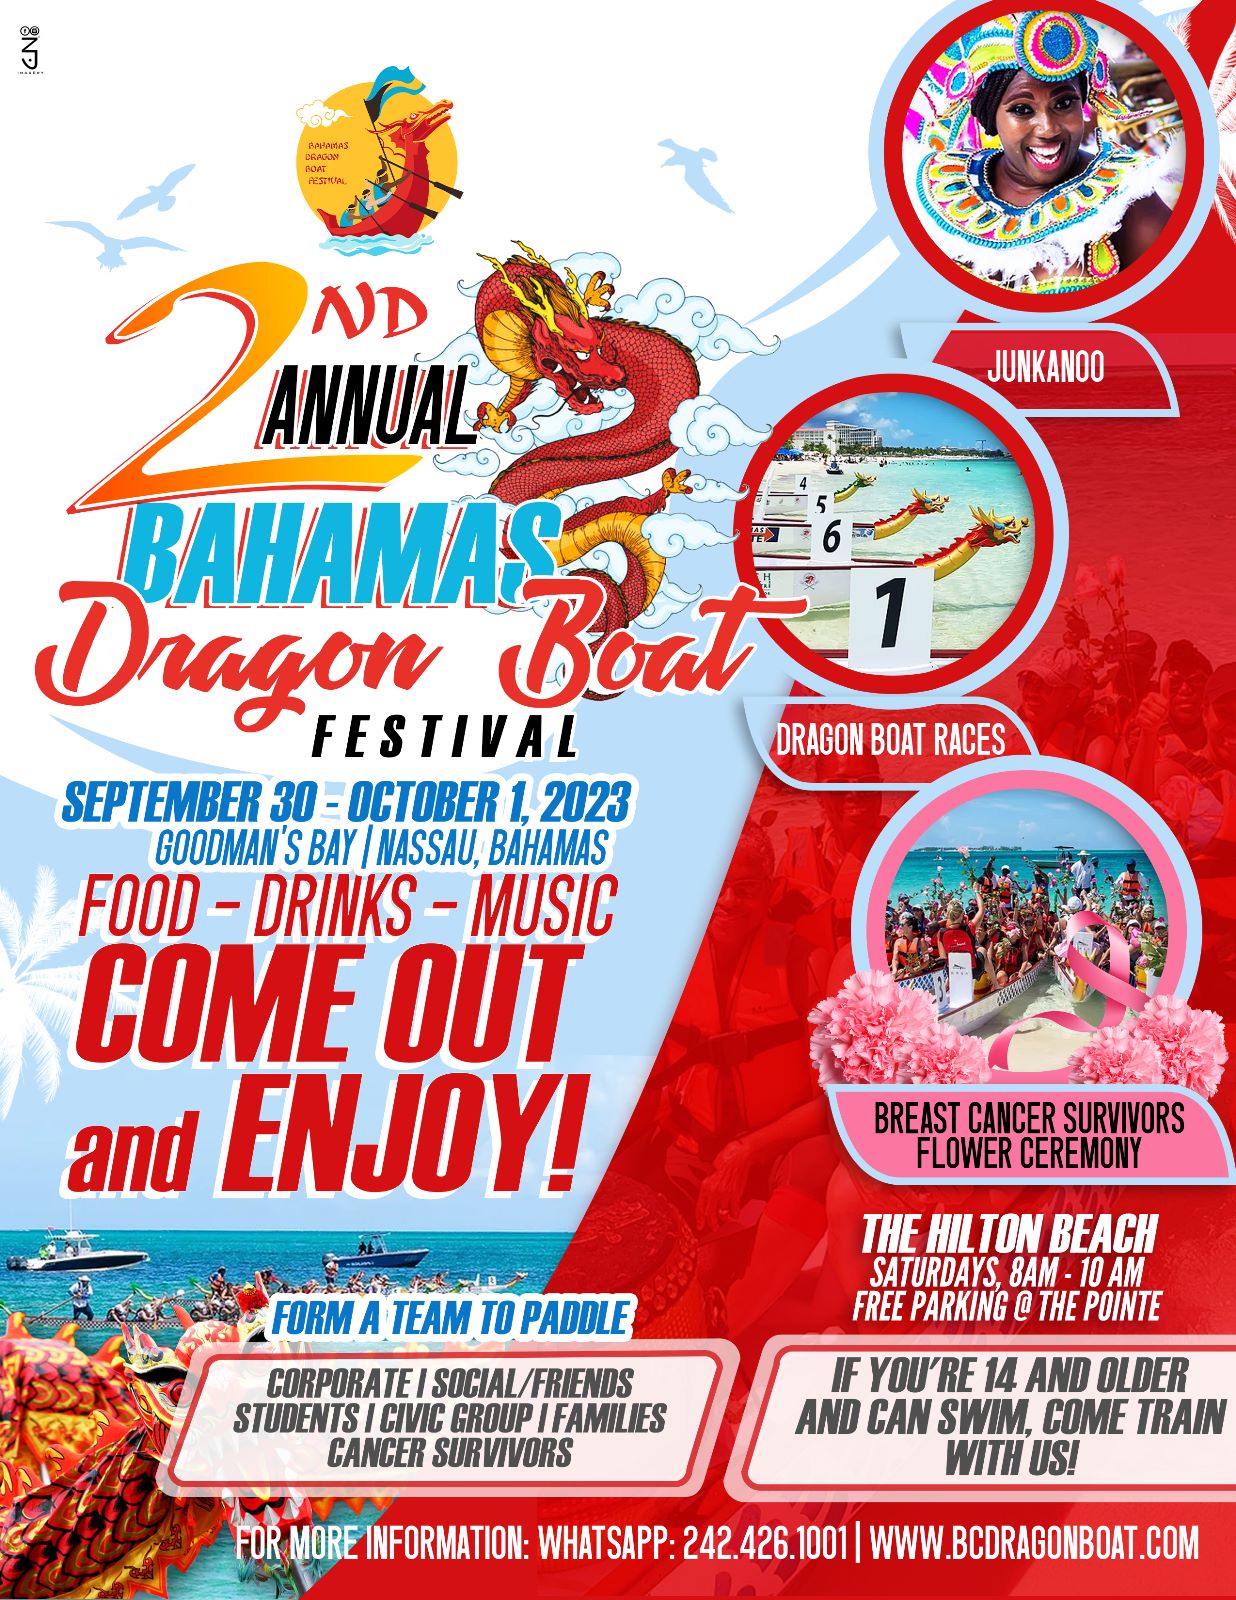 2nd Annual Bahamas Dragon Boat Festival